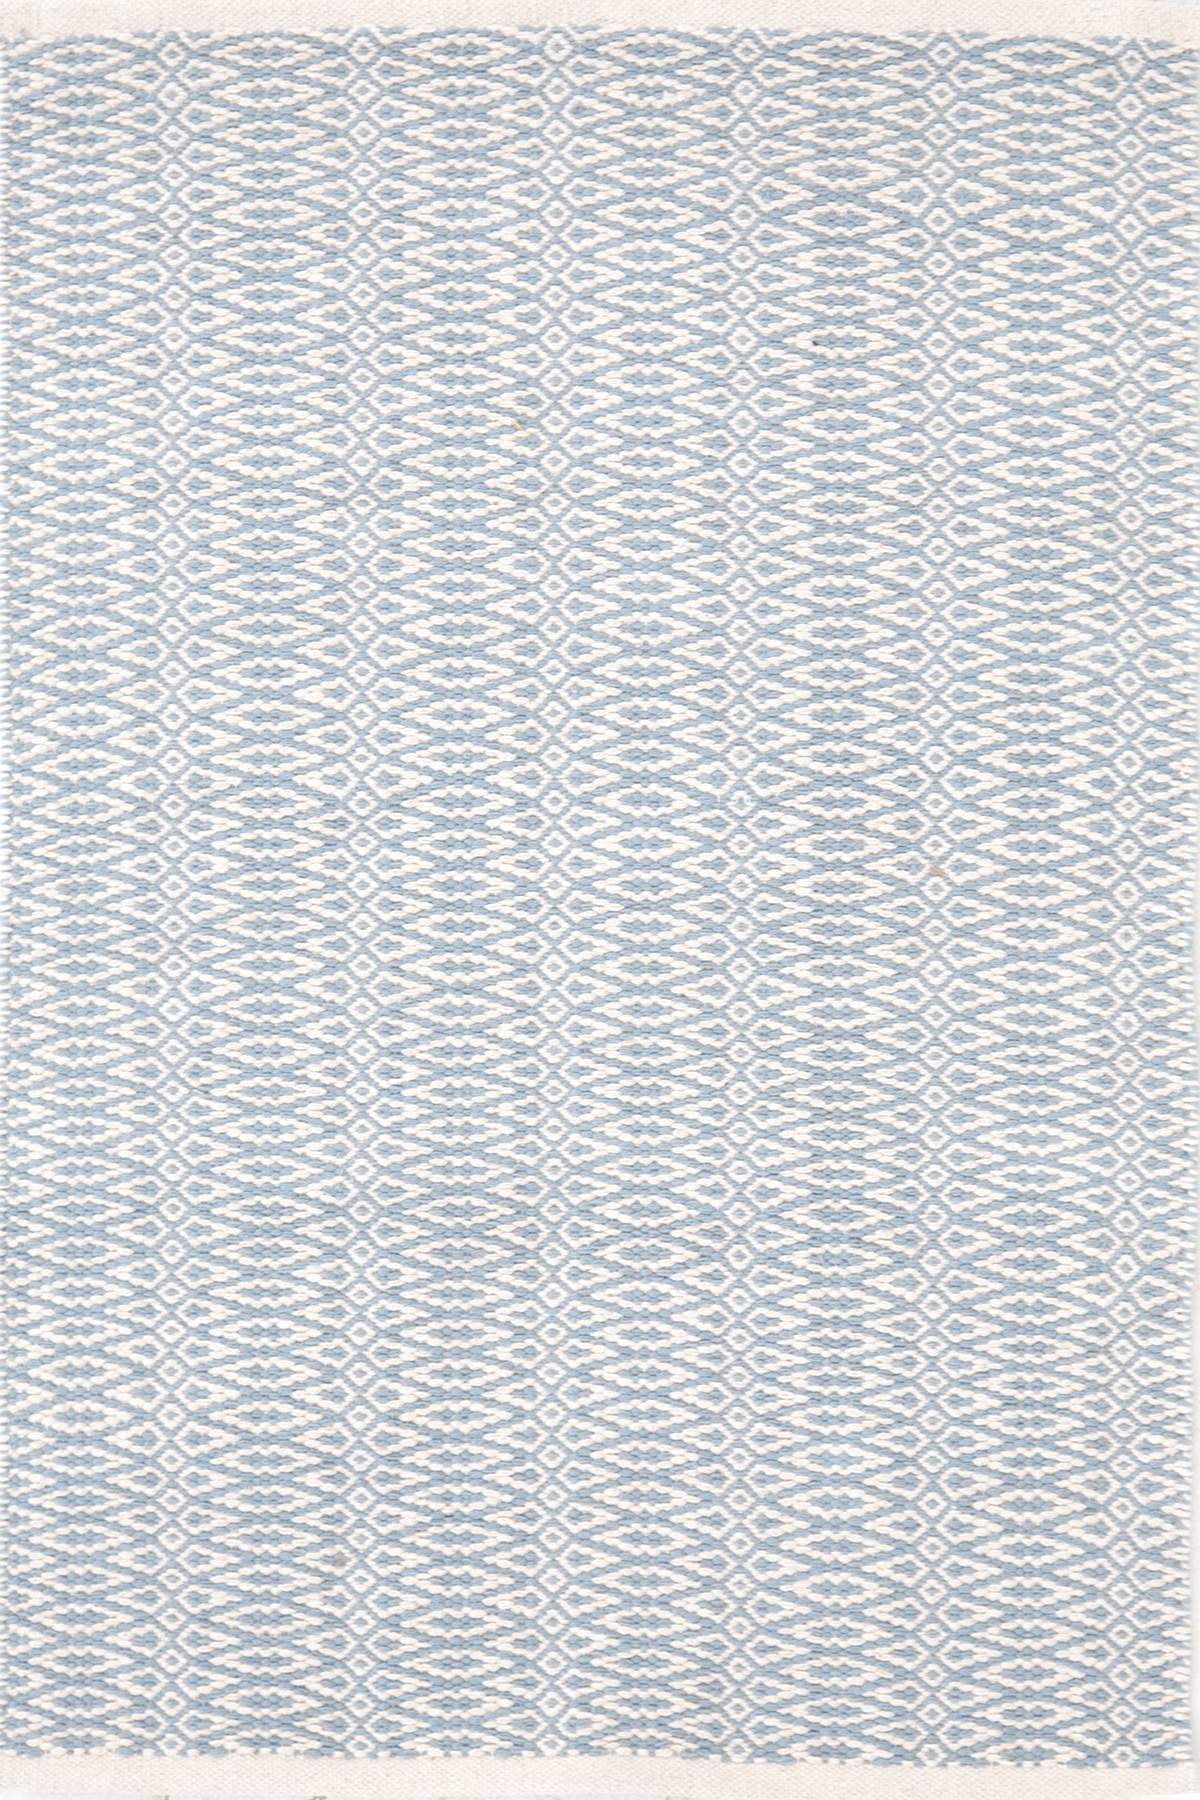 FAIR ISLE SWEDISH BLUE/IVORY COTTON WOVEN RUG - 2x3 - Image 0